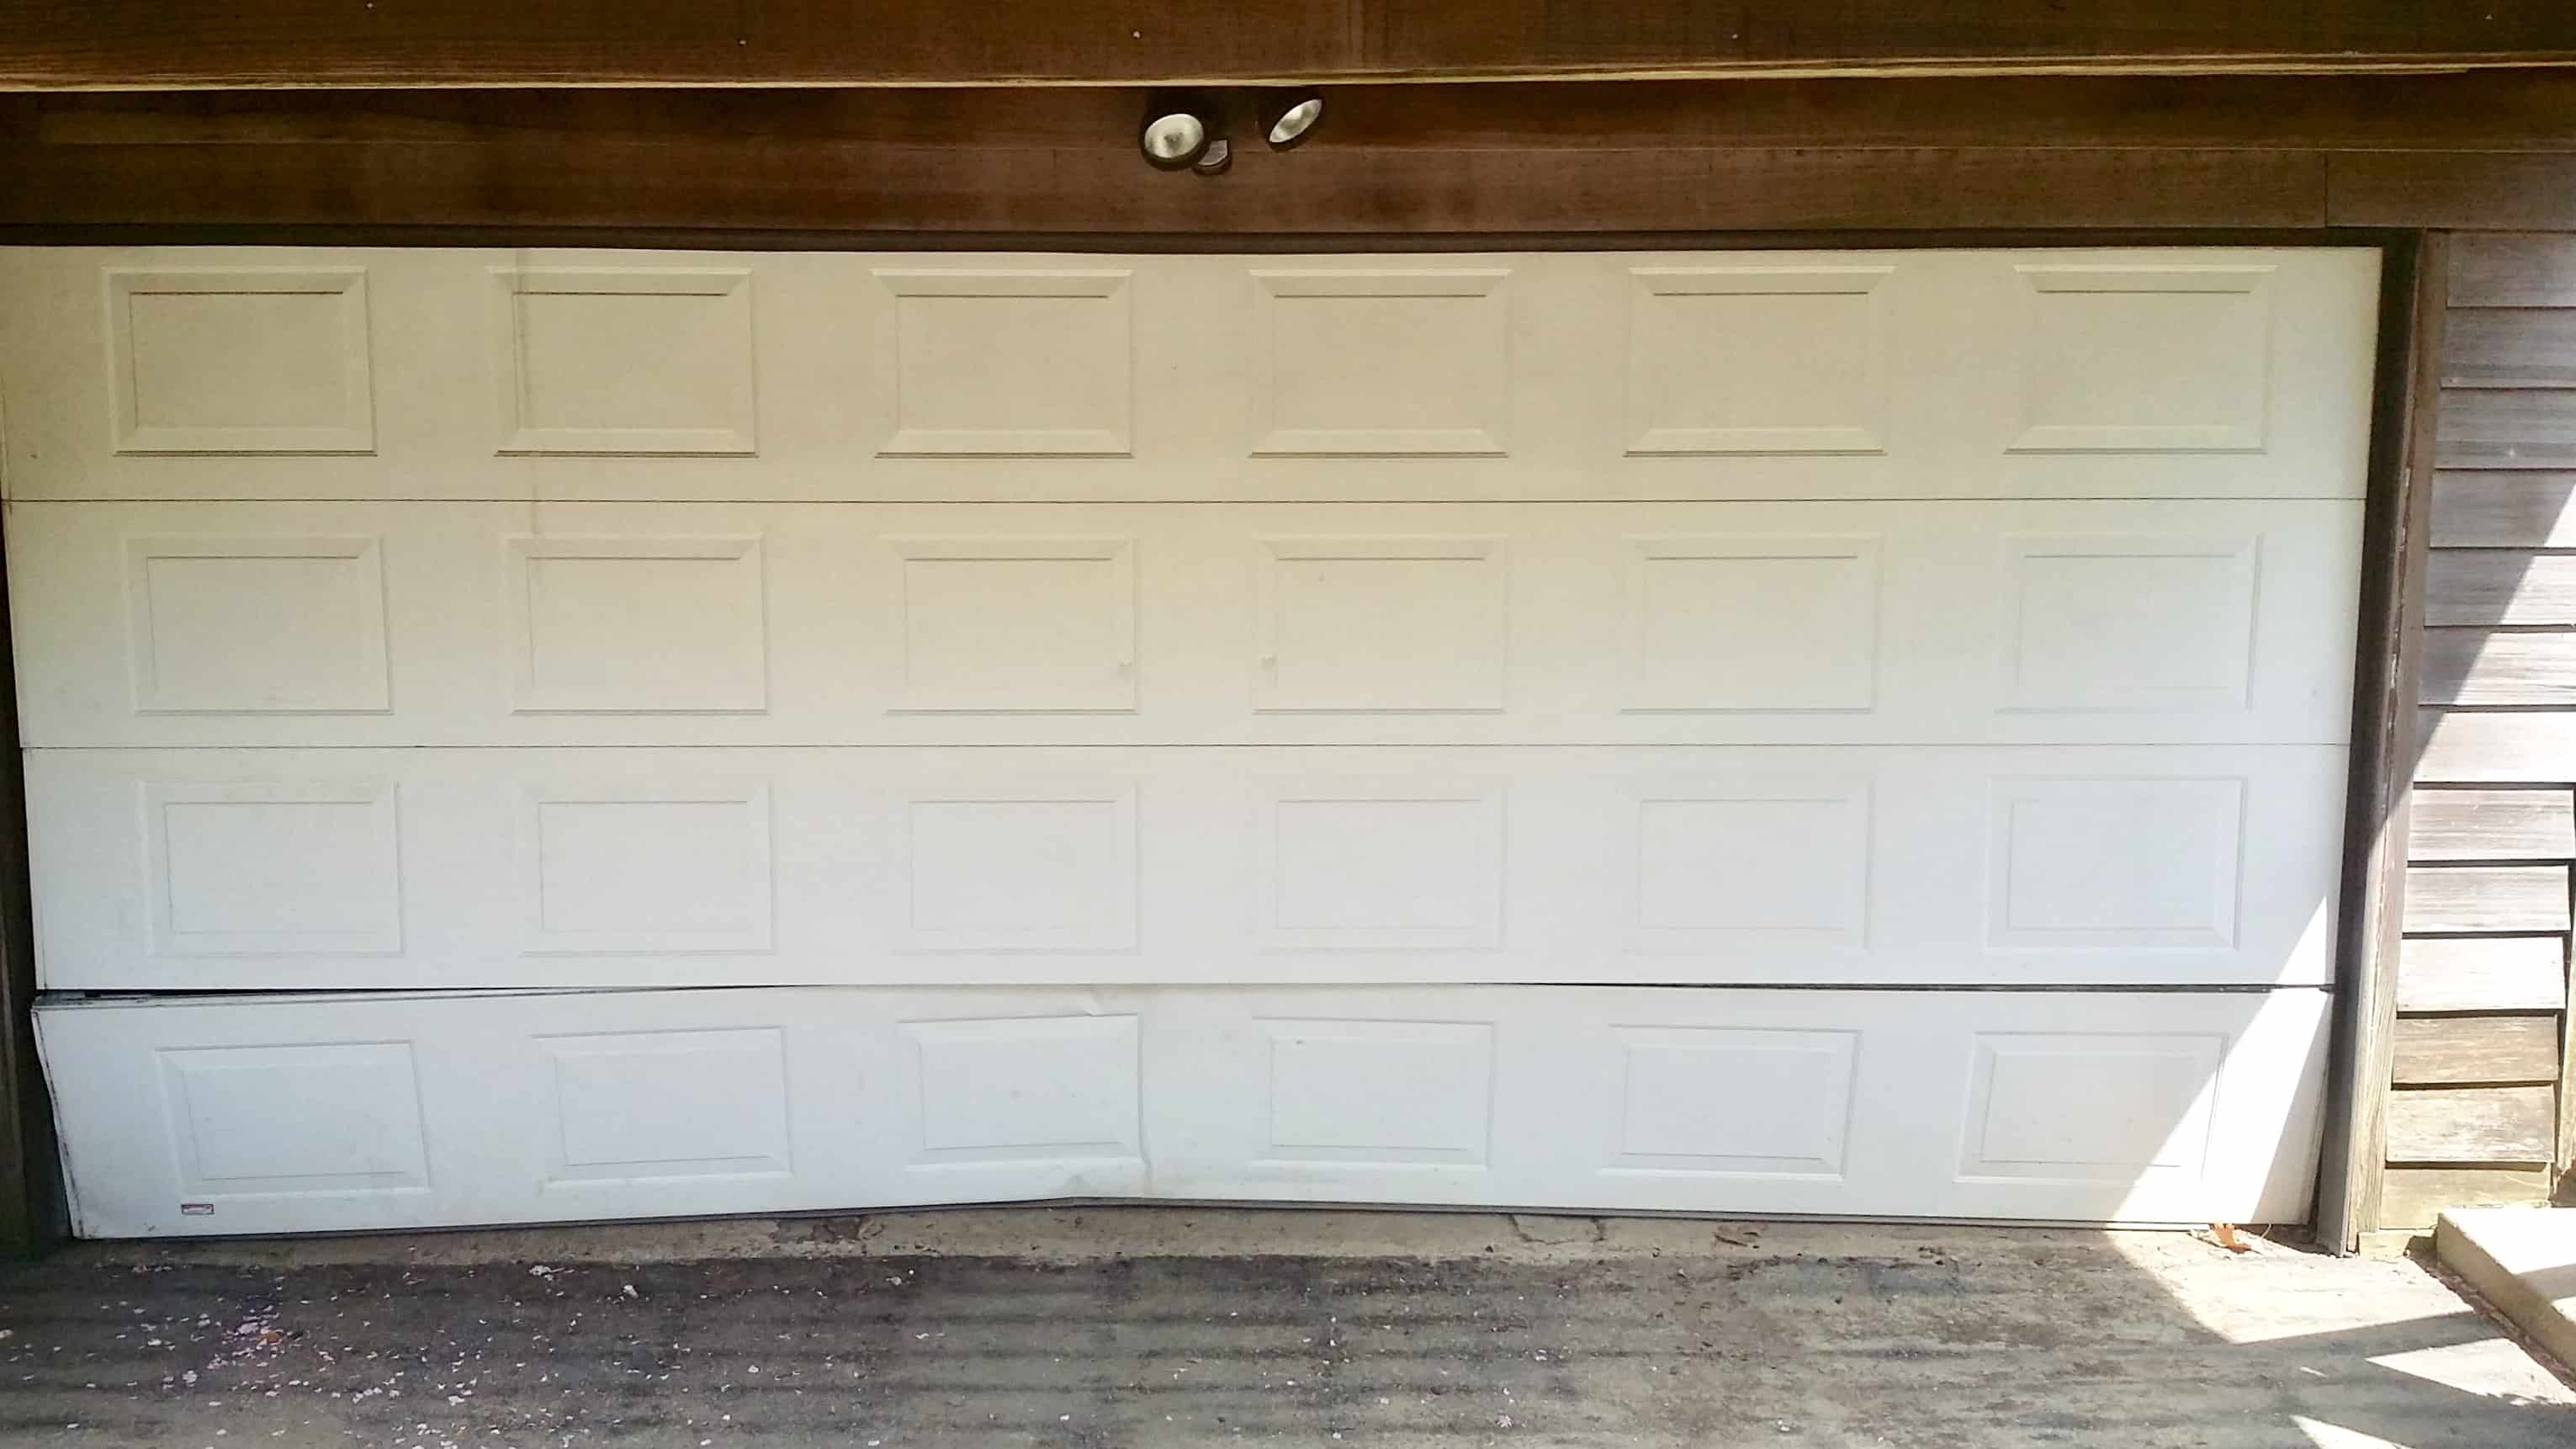 Garage Door Panel Replacement For Your, How To Replace Seal Between Garage Door Panels